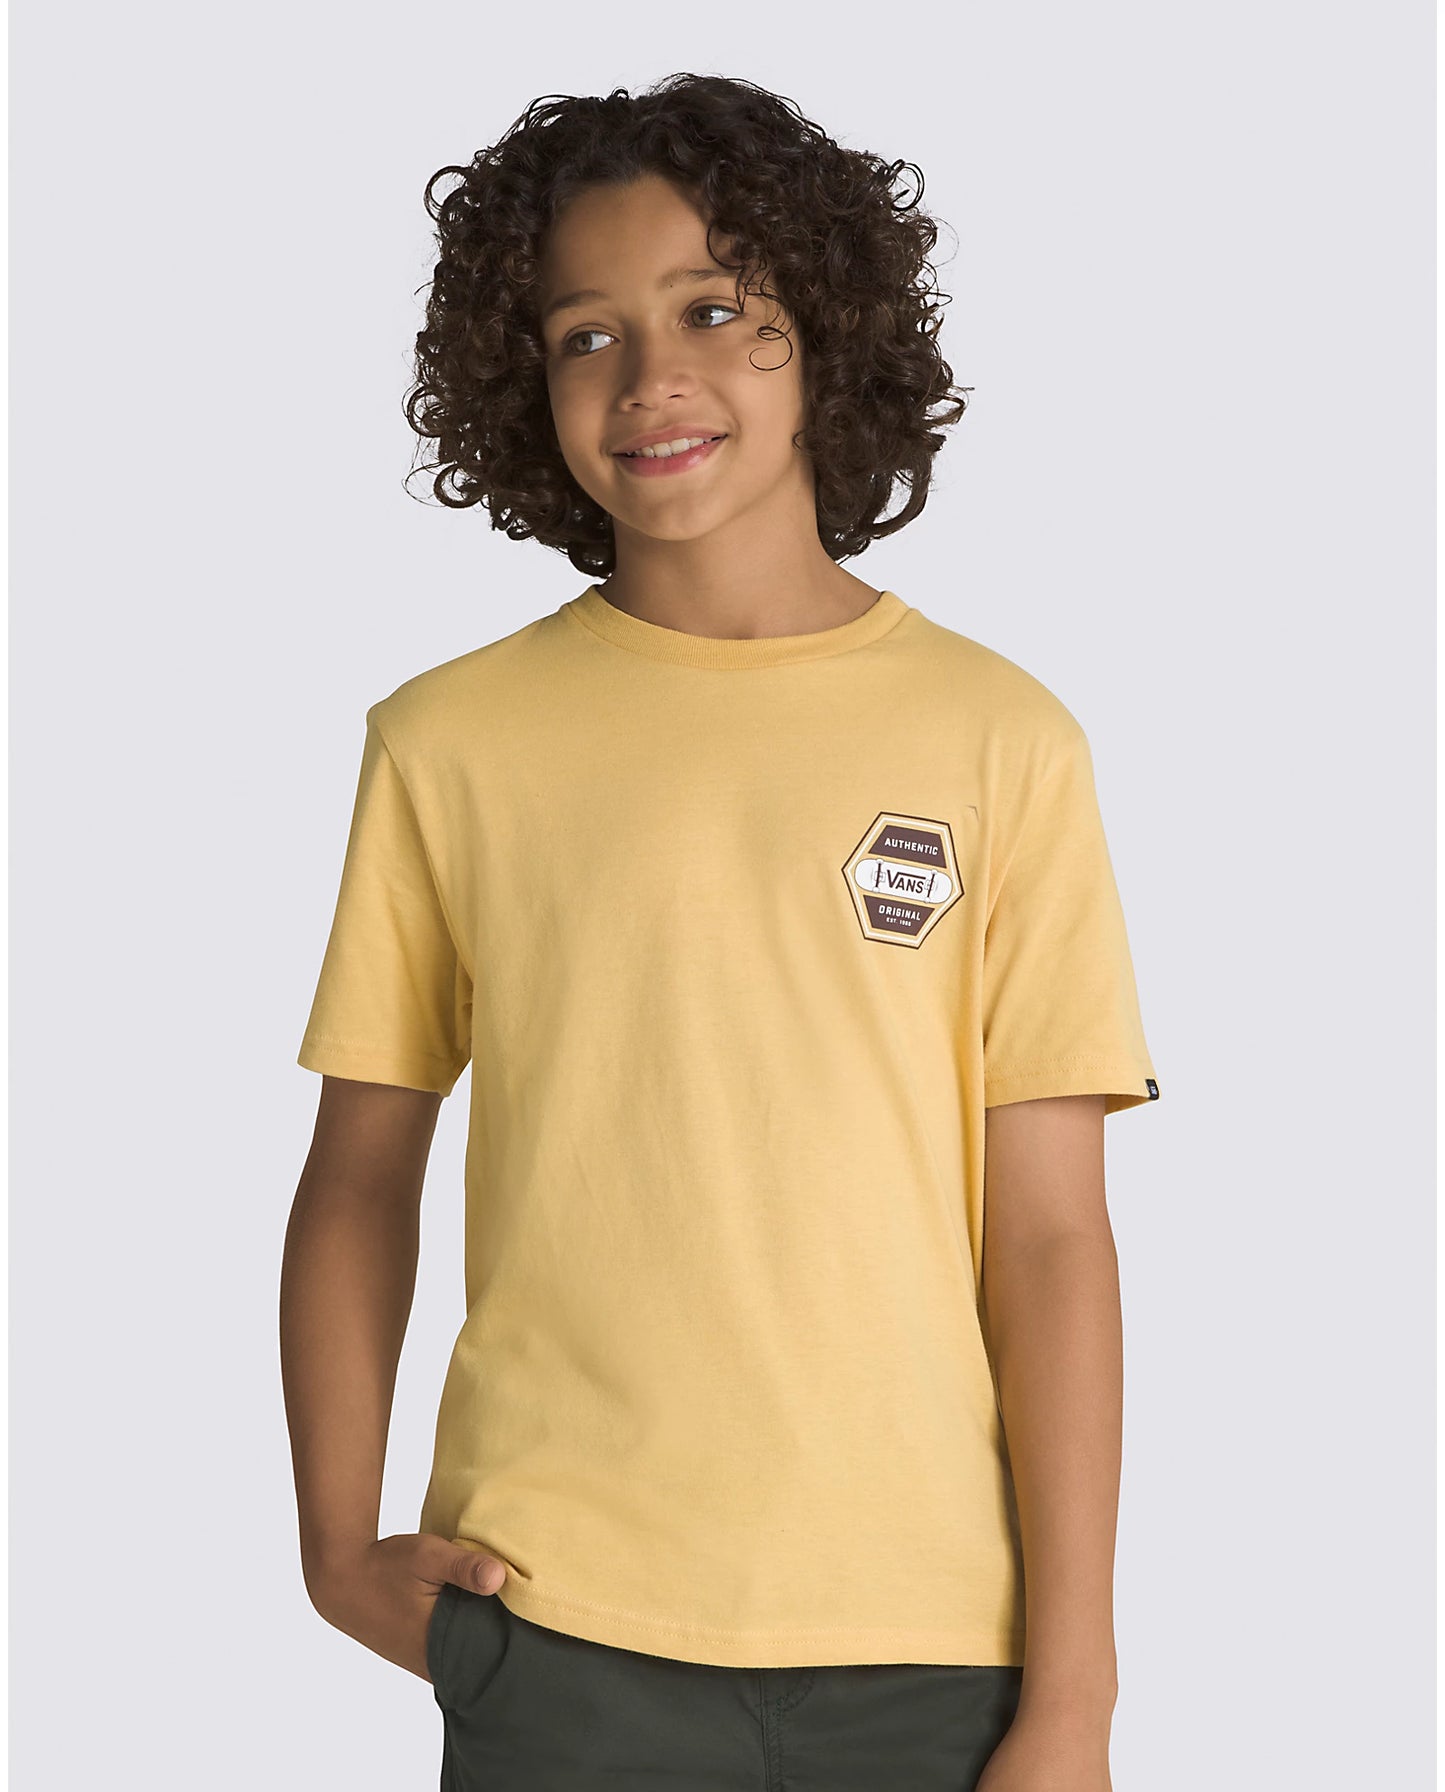 Vans Boys SK8 Authentic 66 Short-Sleeve Shirt - Gold Boys T Shirt